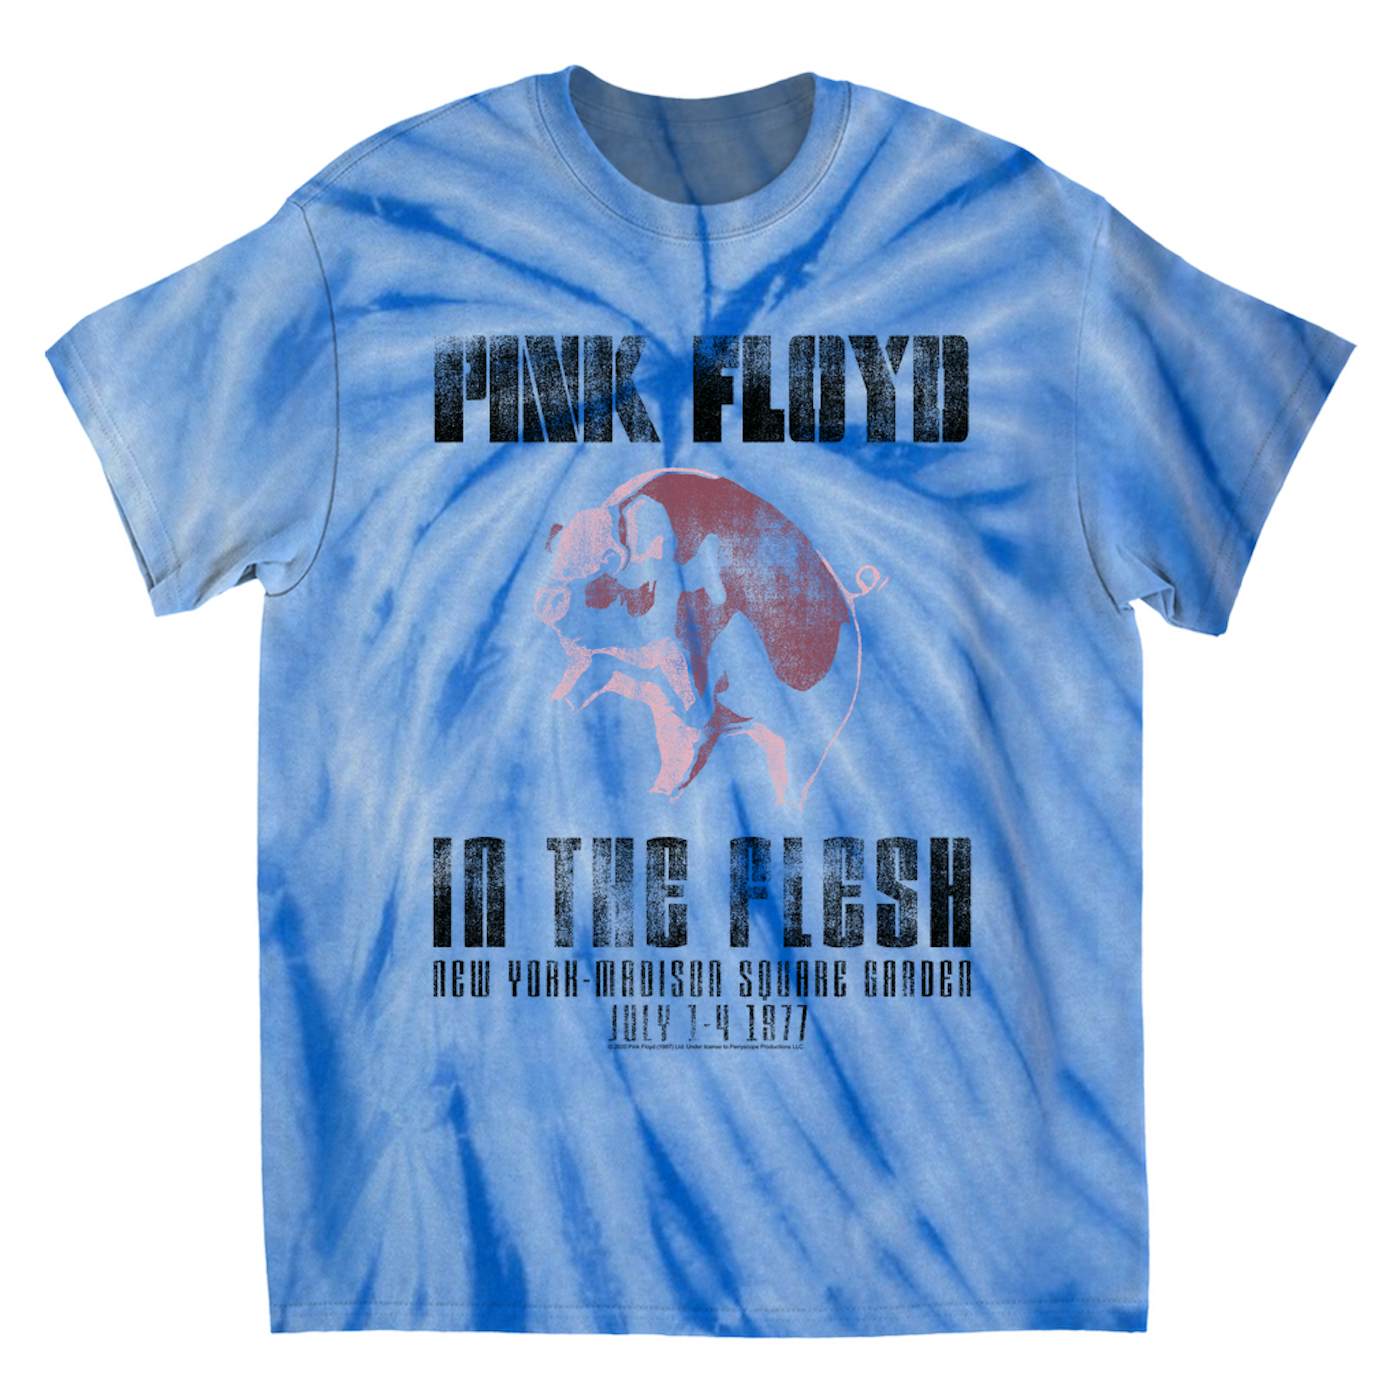 Pink Floyd T-Shirt | In The Flesh 1977 NYC Madison Square Garden Concert (Merchbar Exclusive) Pink Floyd Tie Dye Shirt